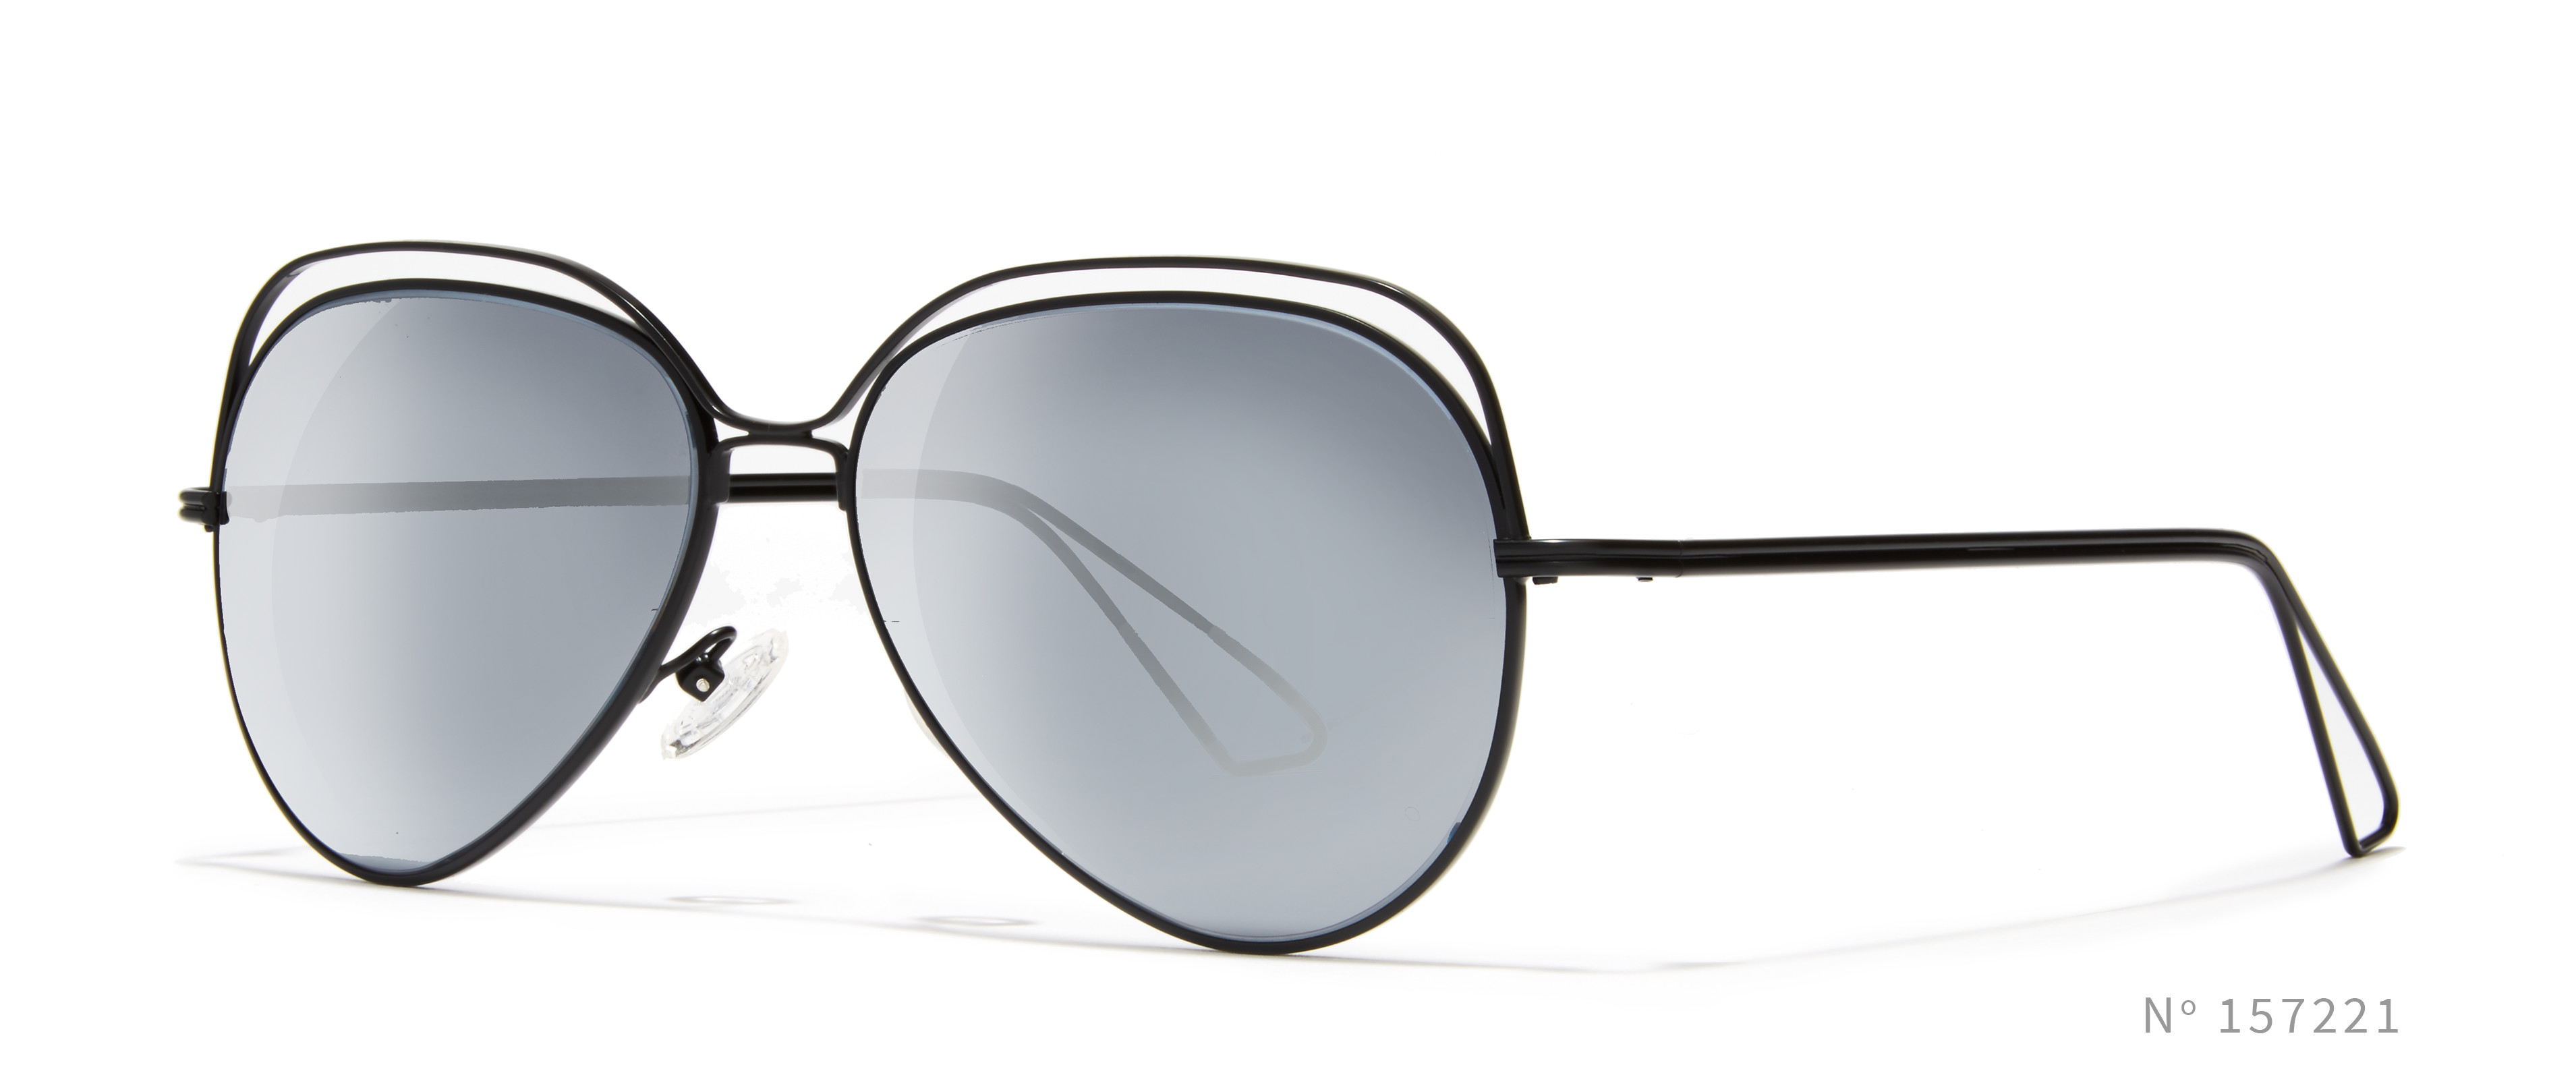 Black Wireframe Aviator Sunglasses